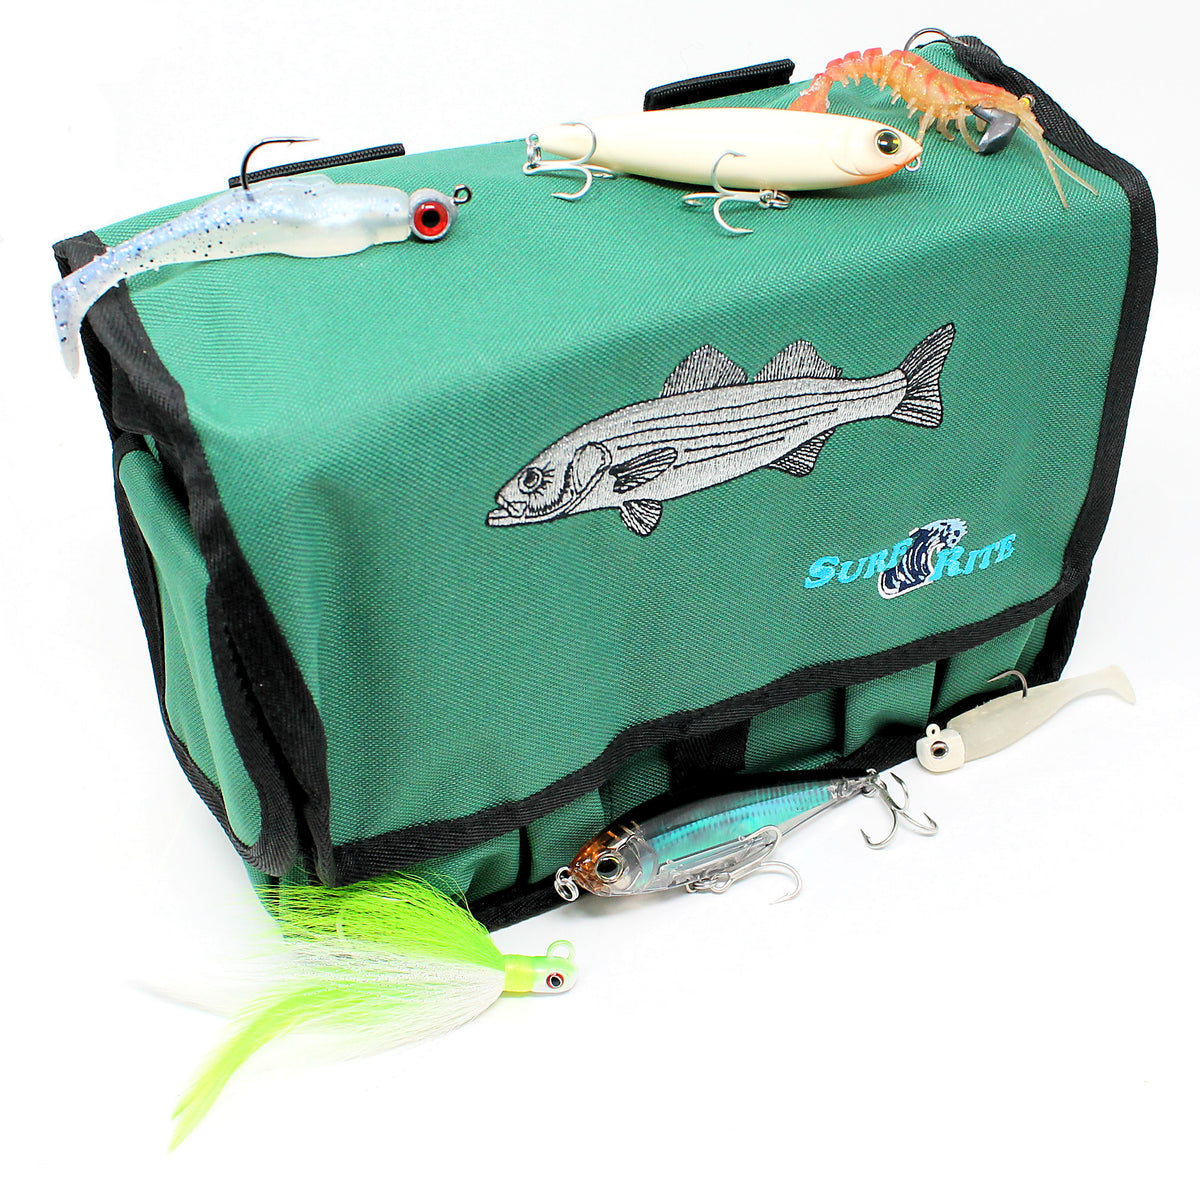 PENN TOURNAMENT fishing tackle bag review (ULTIMATE) (tackle box) 